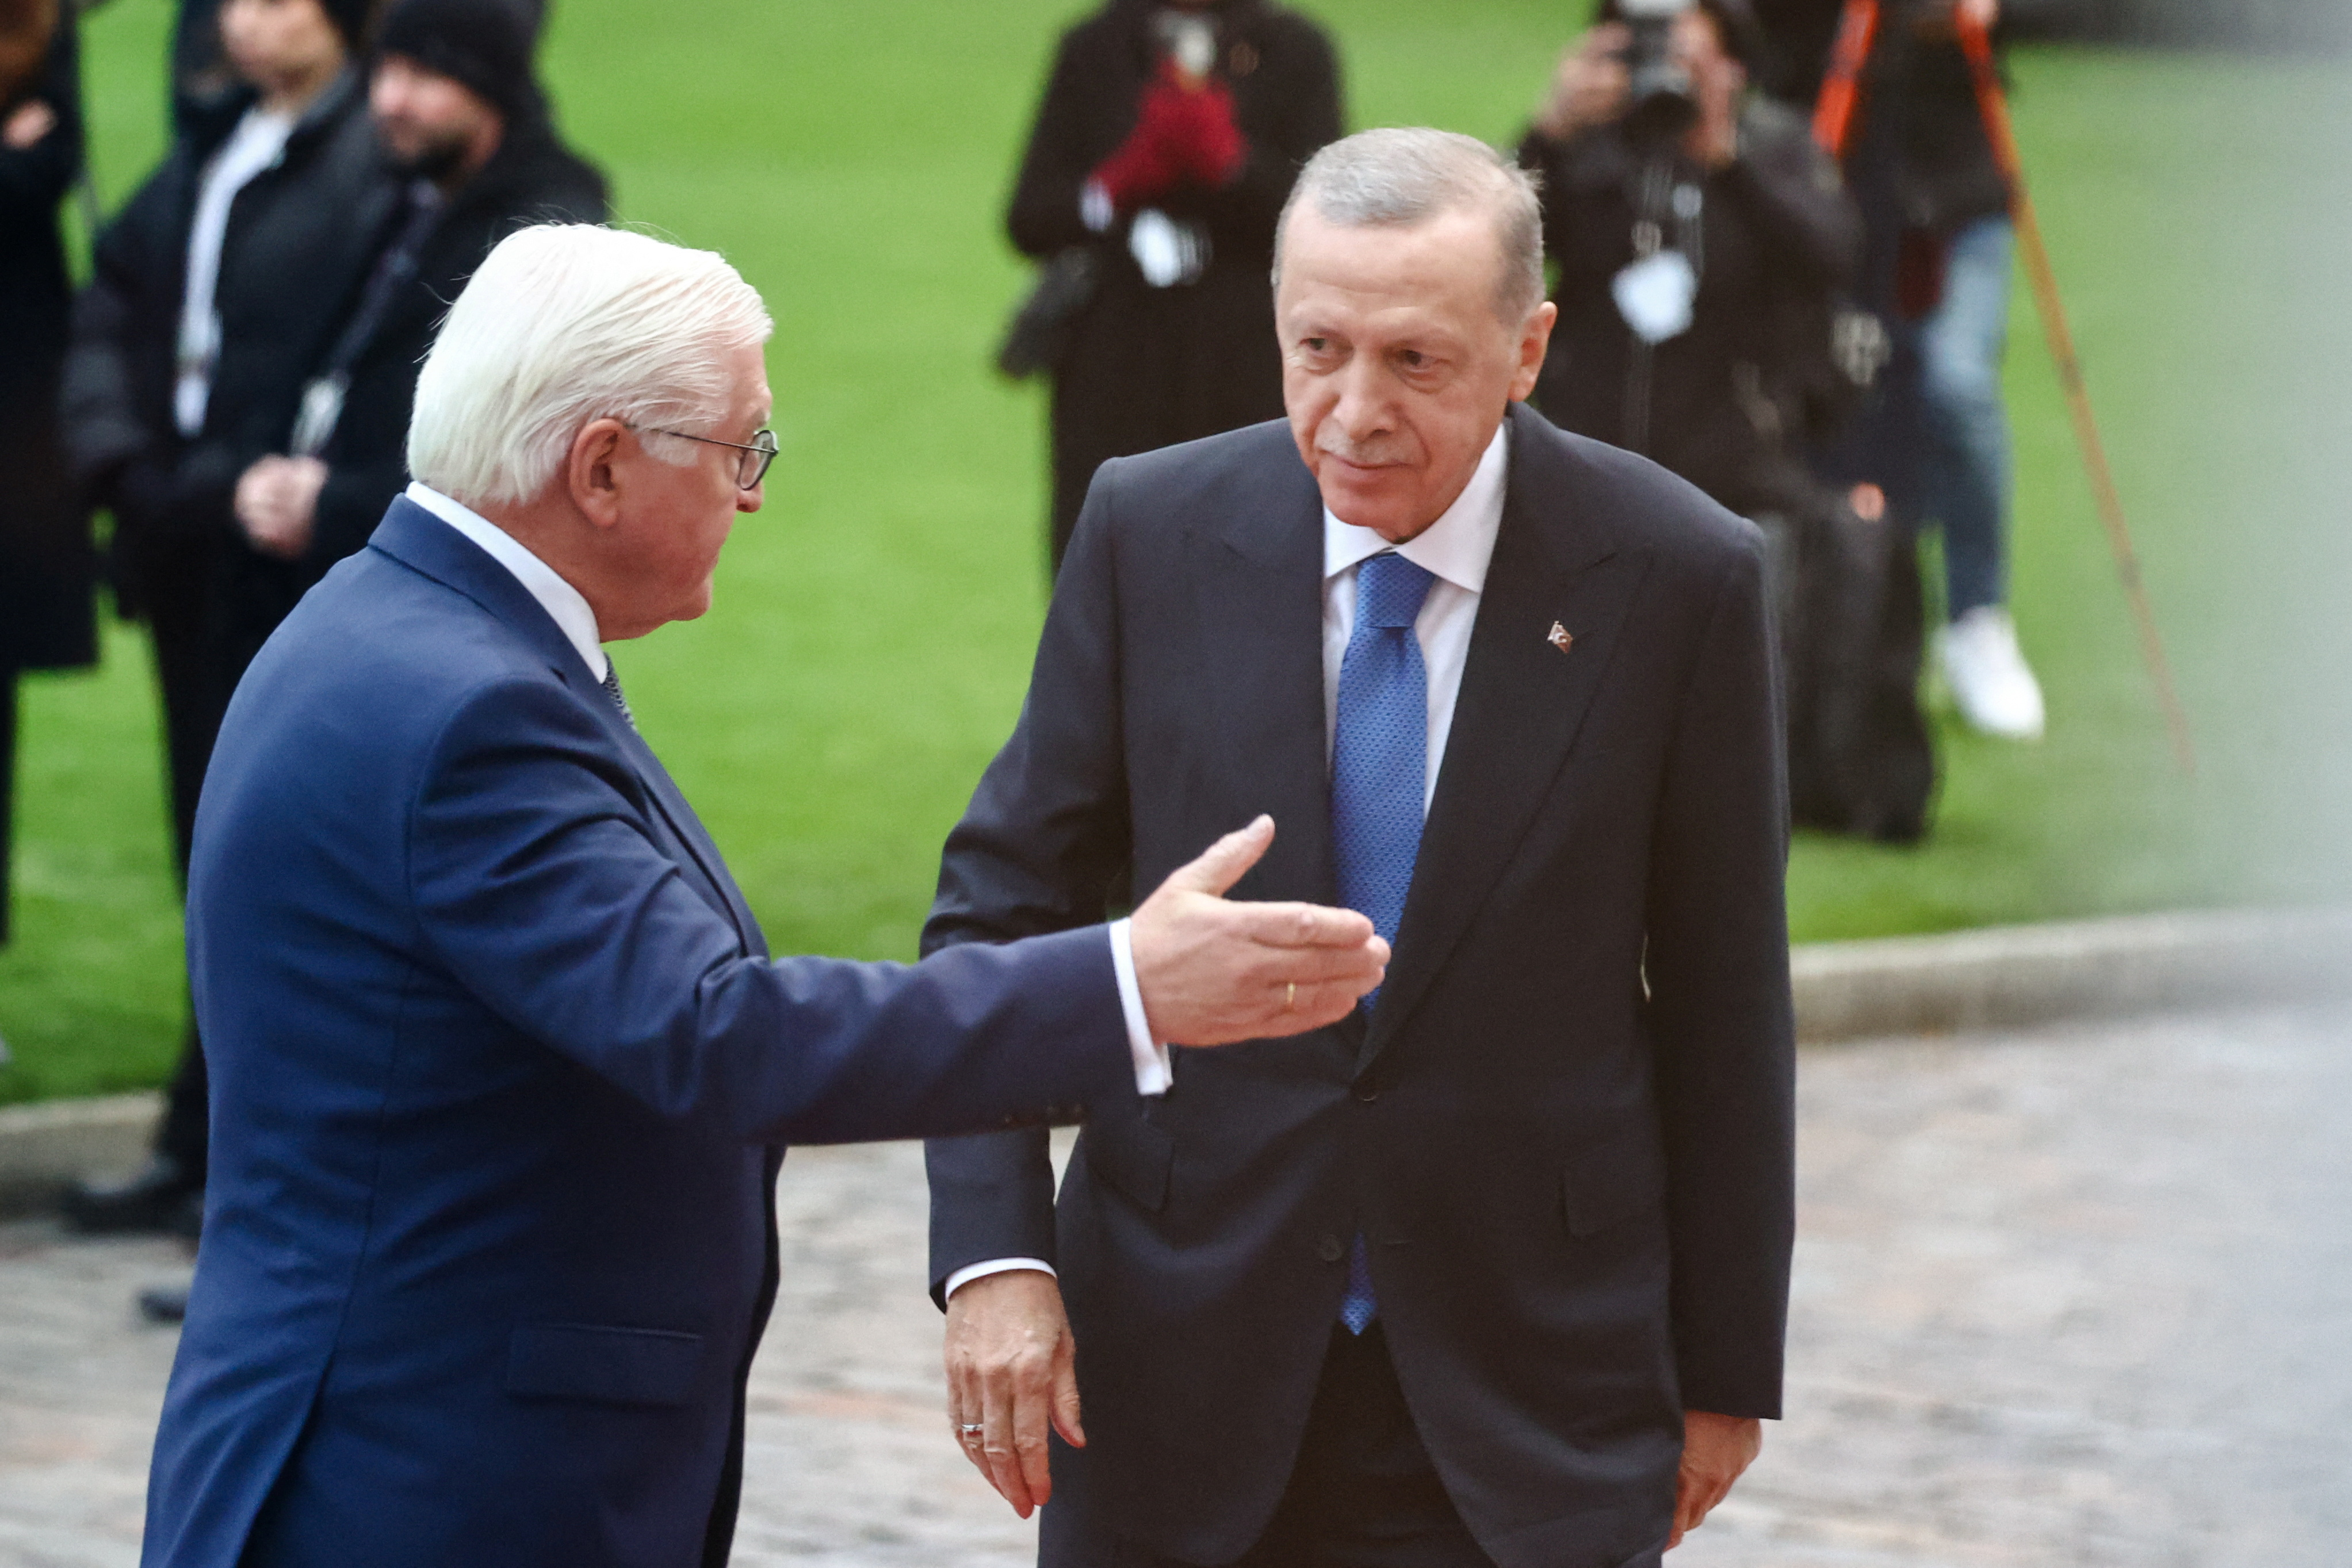 Erdogan is welcomed by German President Frank-Walter Steinmeier at Bellevue Castle in Berlin on Friday. /Liesa Johannssen/Reuters